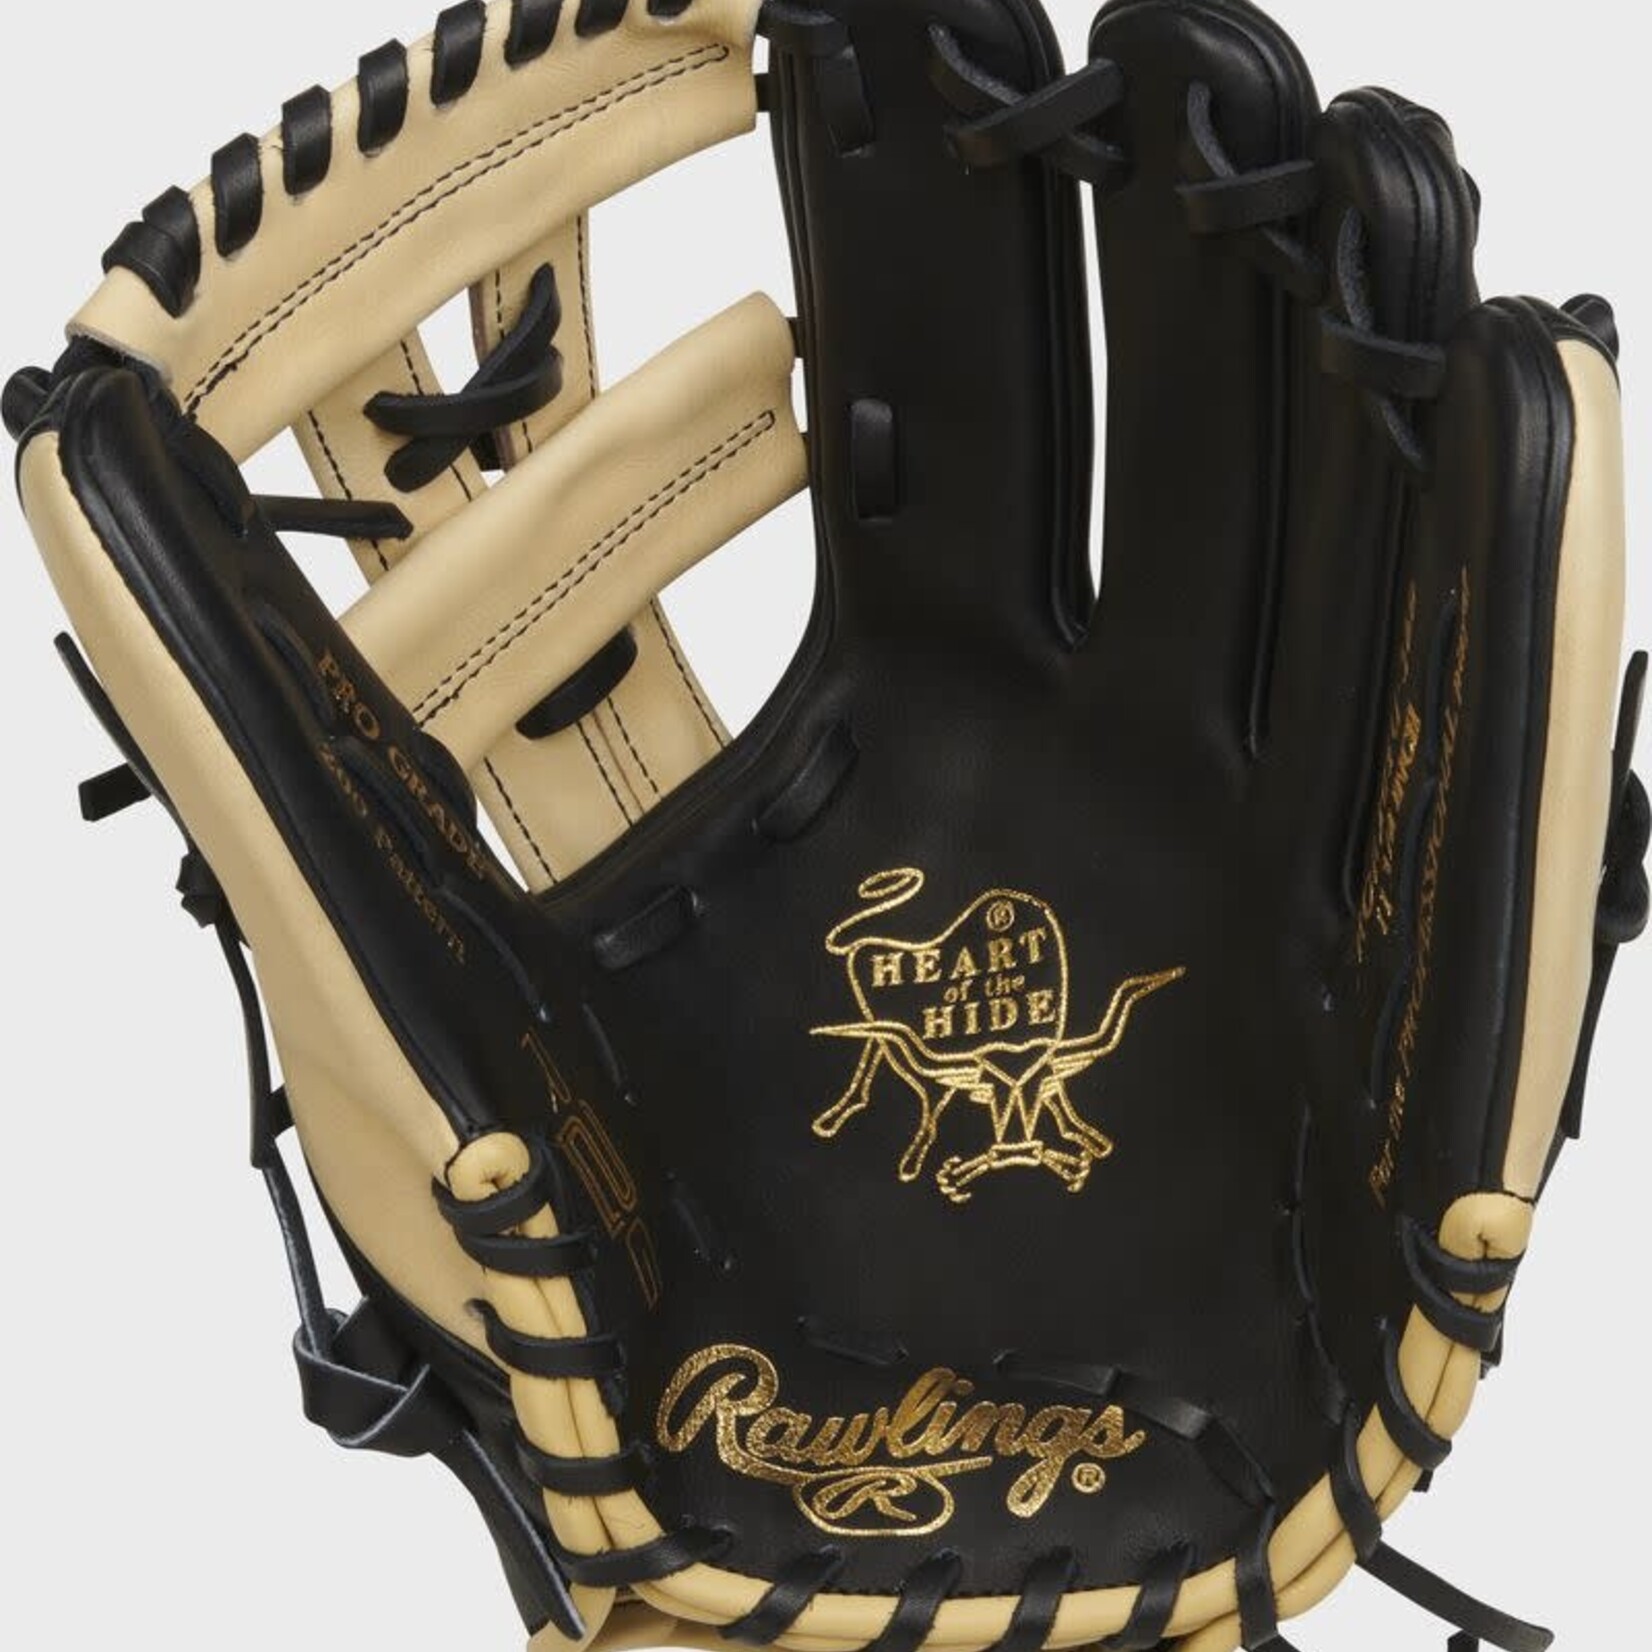 Rawlings Rawlings Baseball Glove, Heart of the Hide Contour RPROR205U-32B, 11.75”, Reg